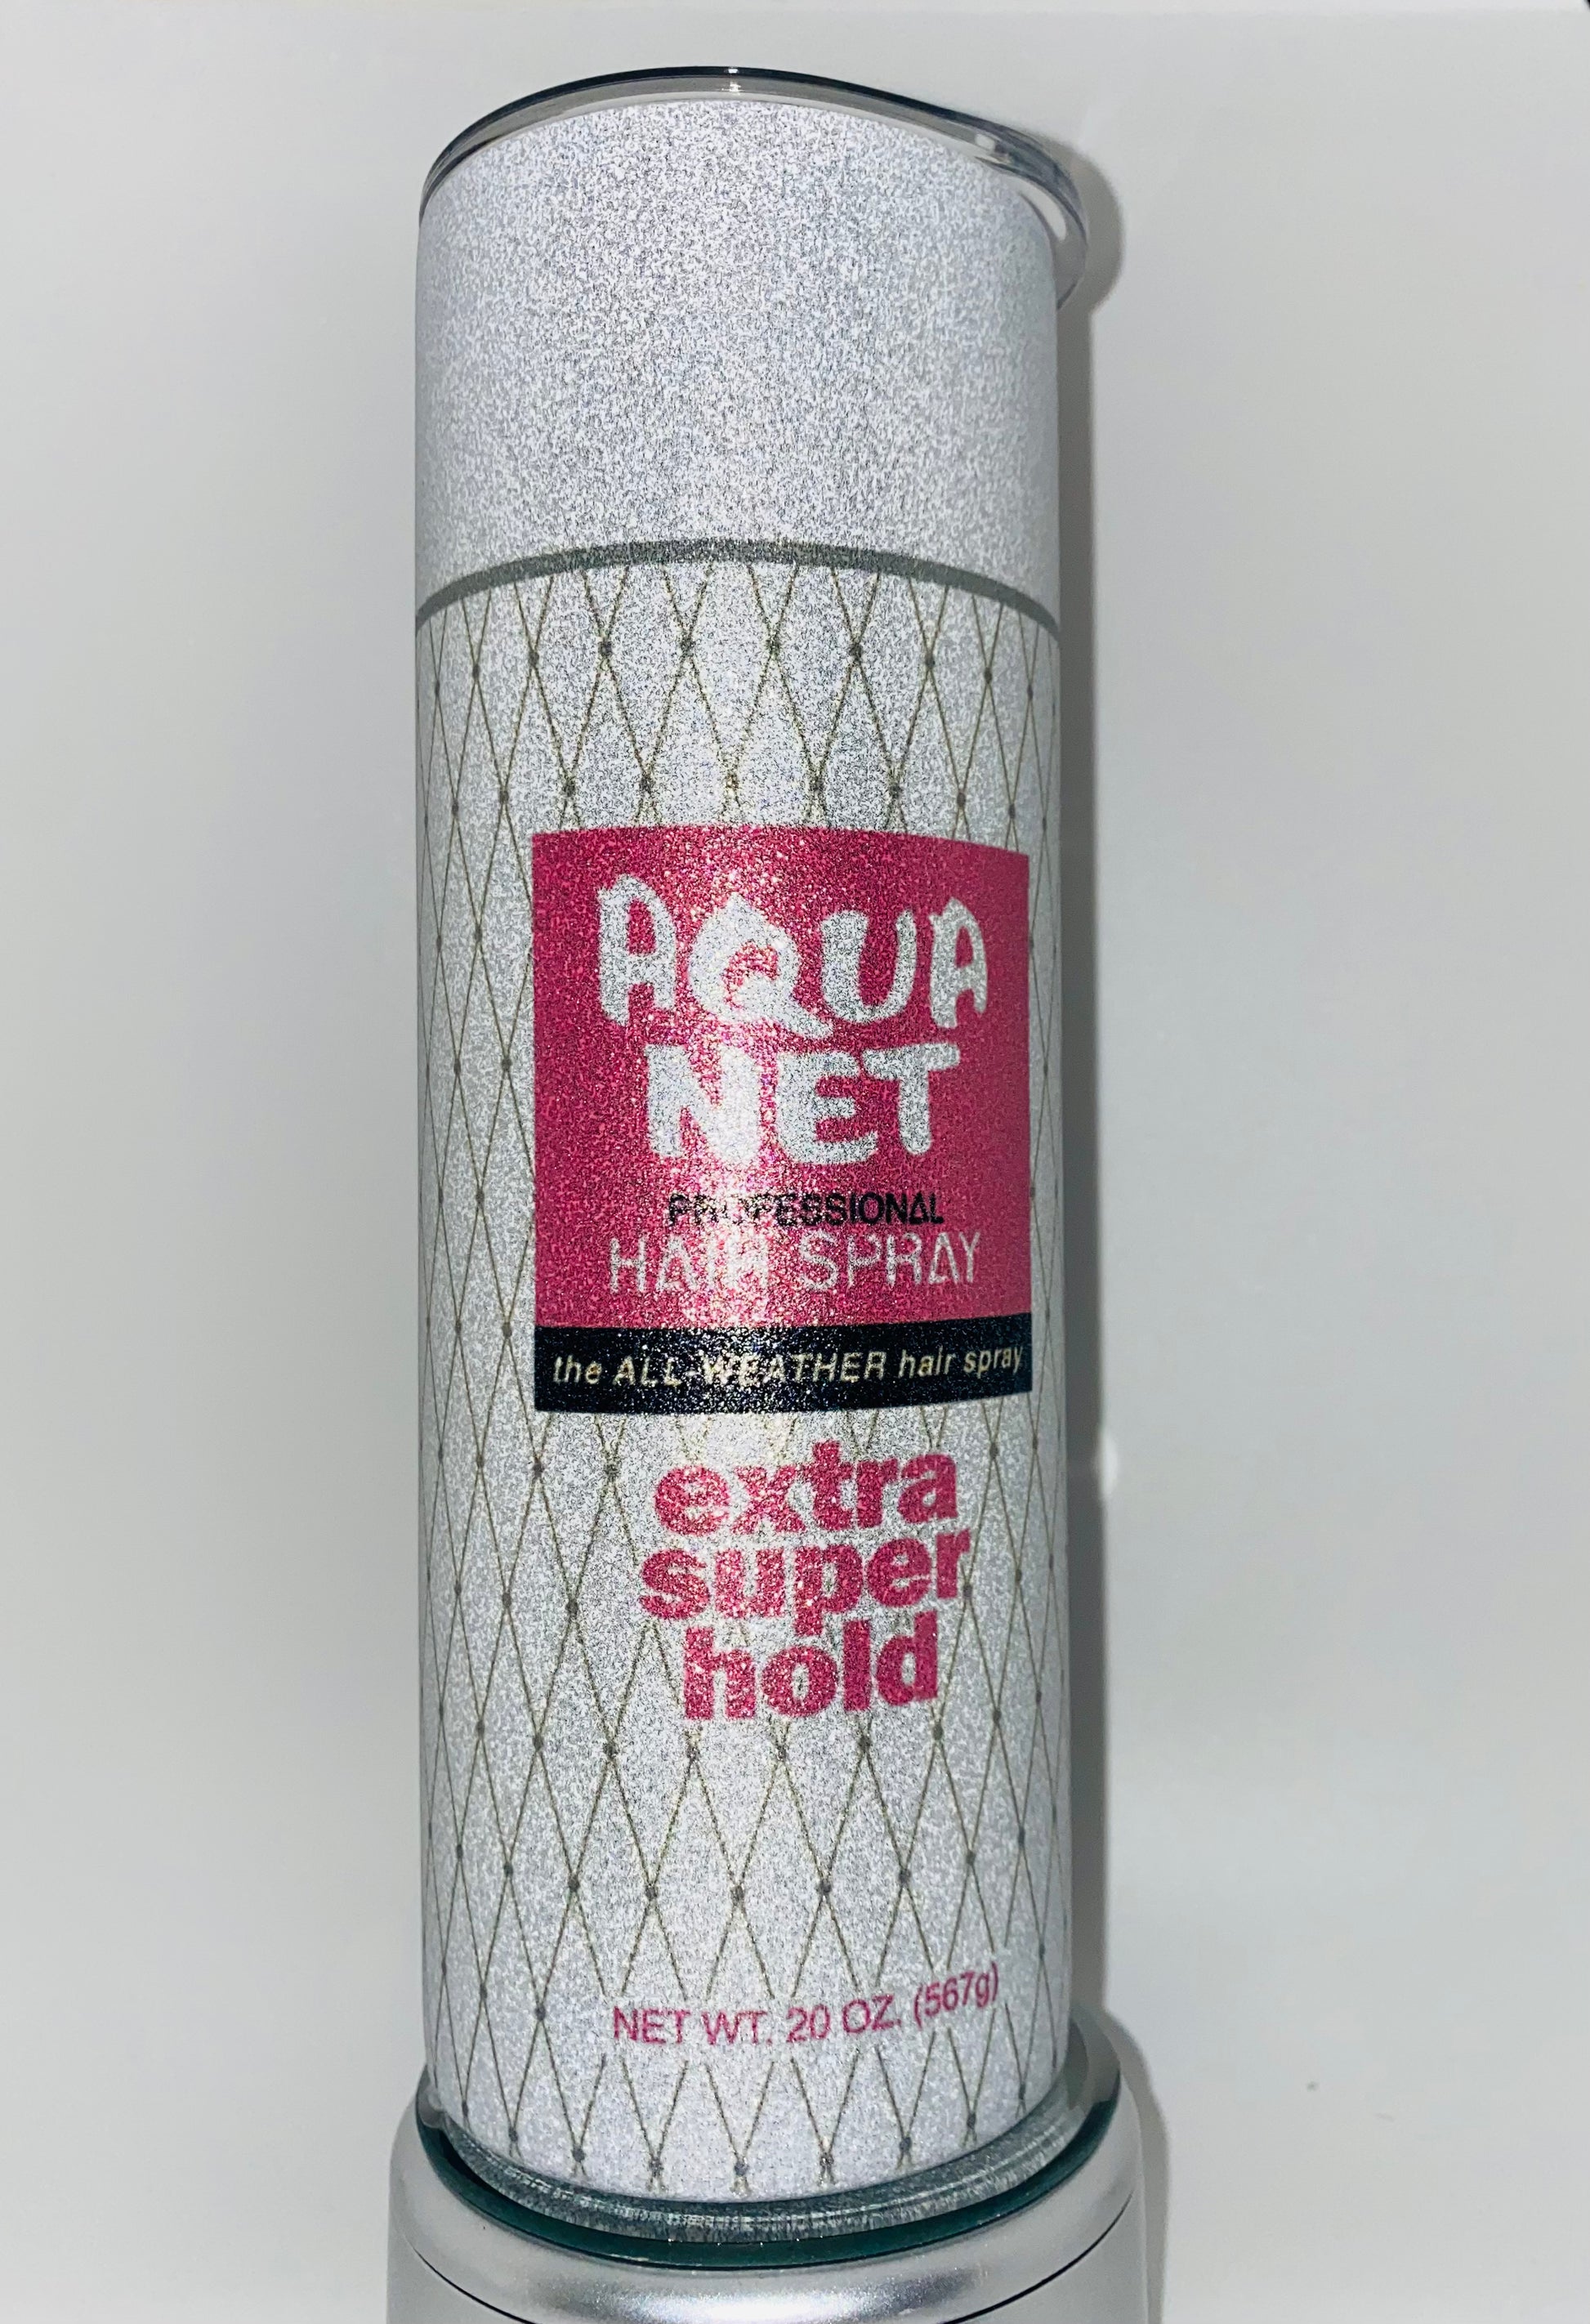 Aqua Net Hairspray Design 20 Oz Double Walled Skinny Tumbler 80s 90s 